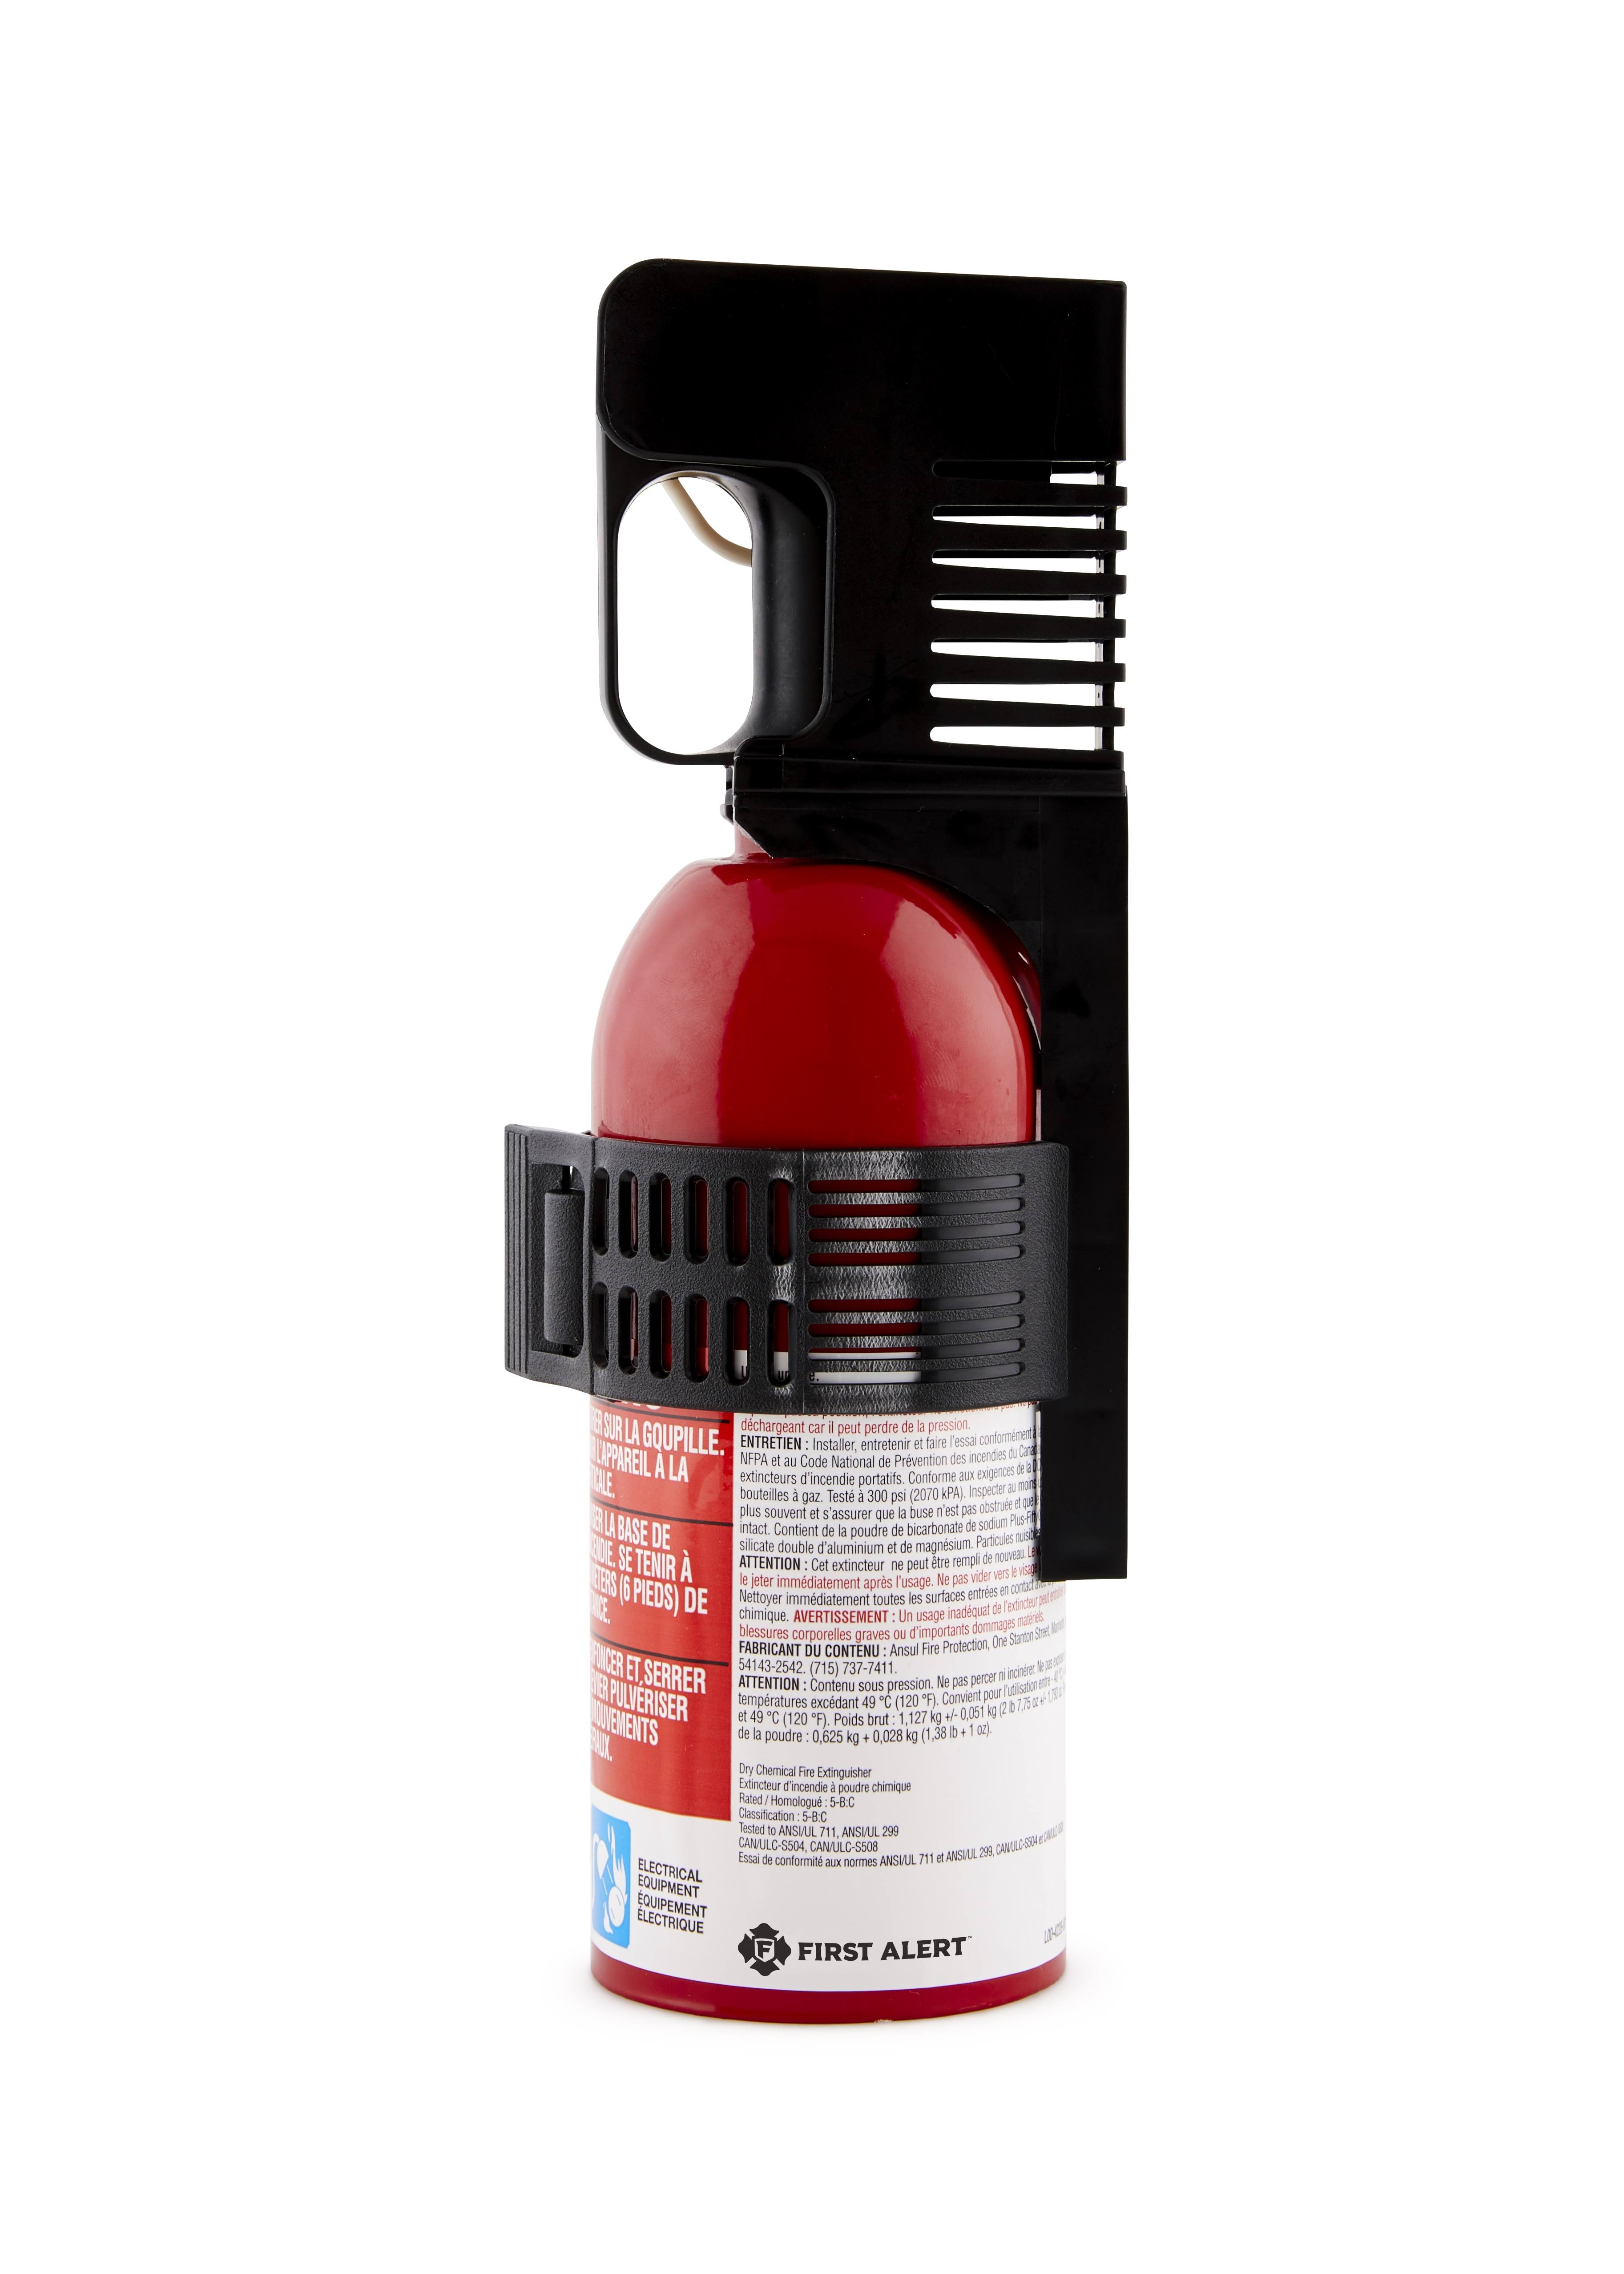 First Alert Auto Fire Extinguisher - 2lb